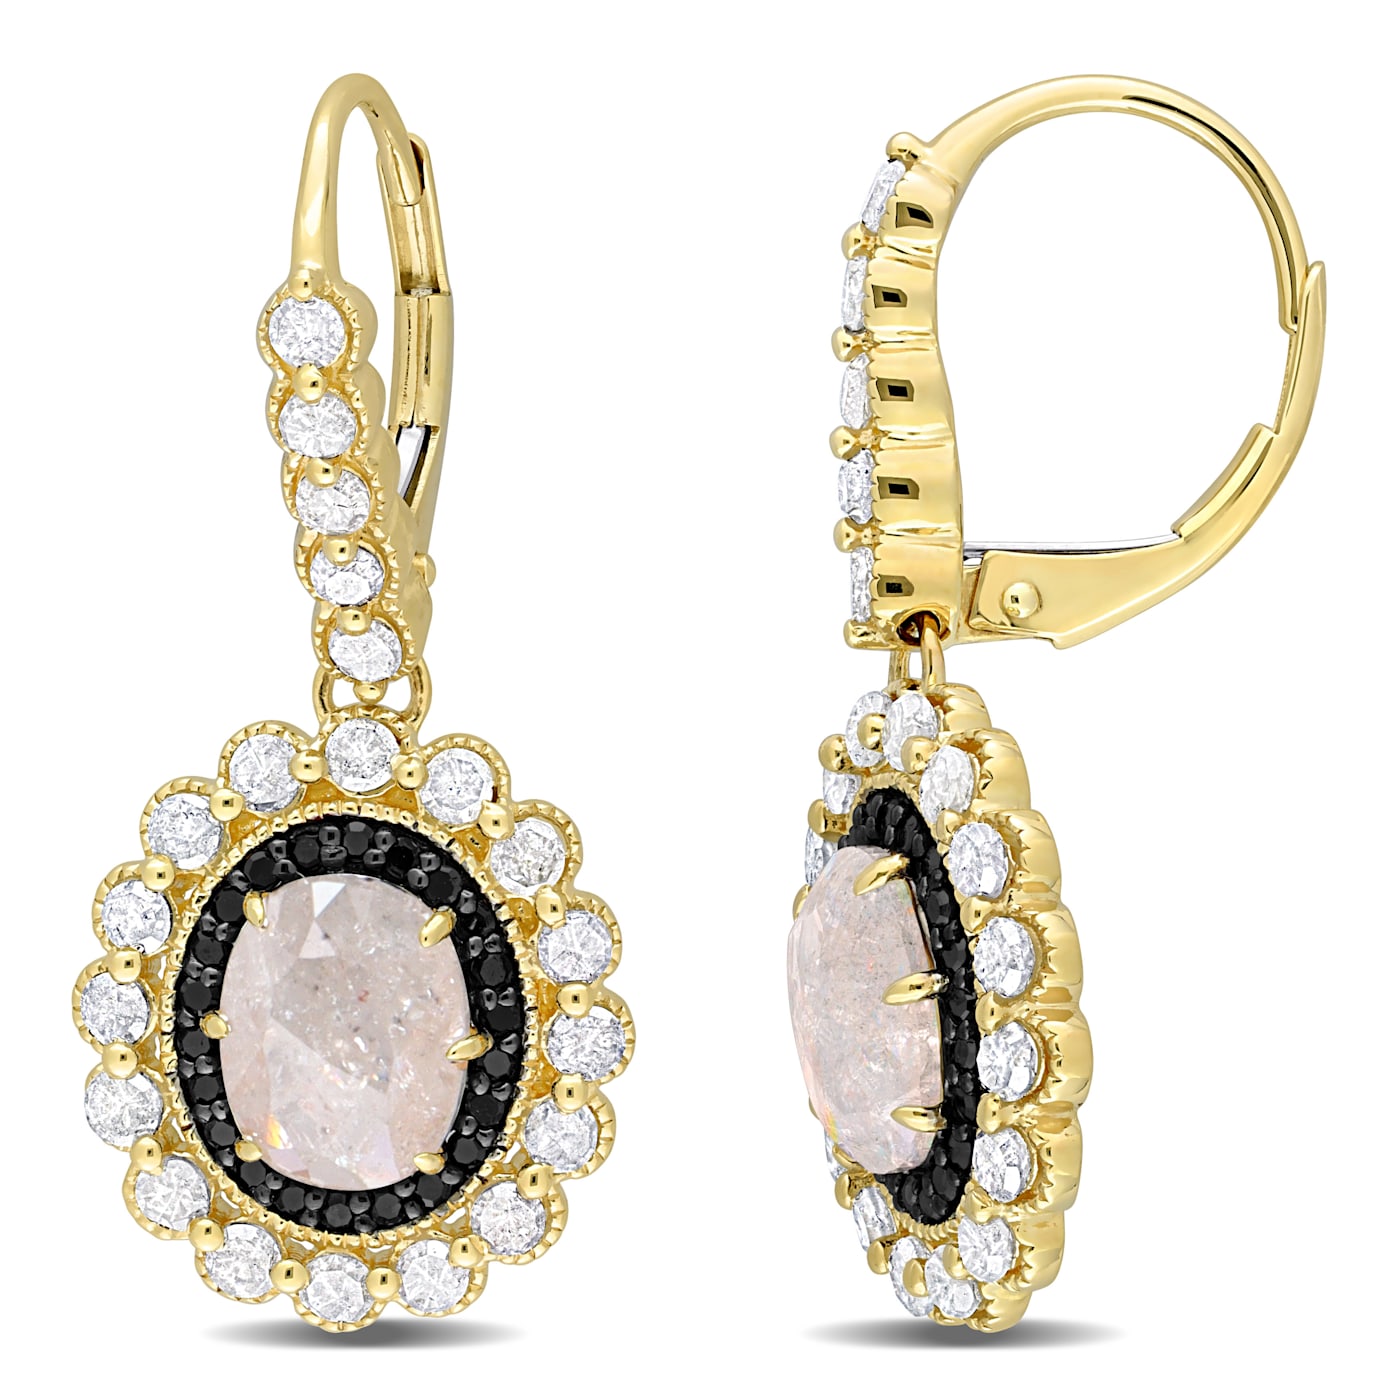 Details about   Stunning Morganite Gemstone Drop Shape Jewelry 10k Yellow Gold Earrings 